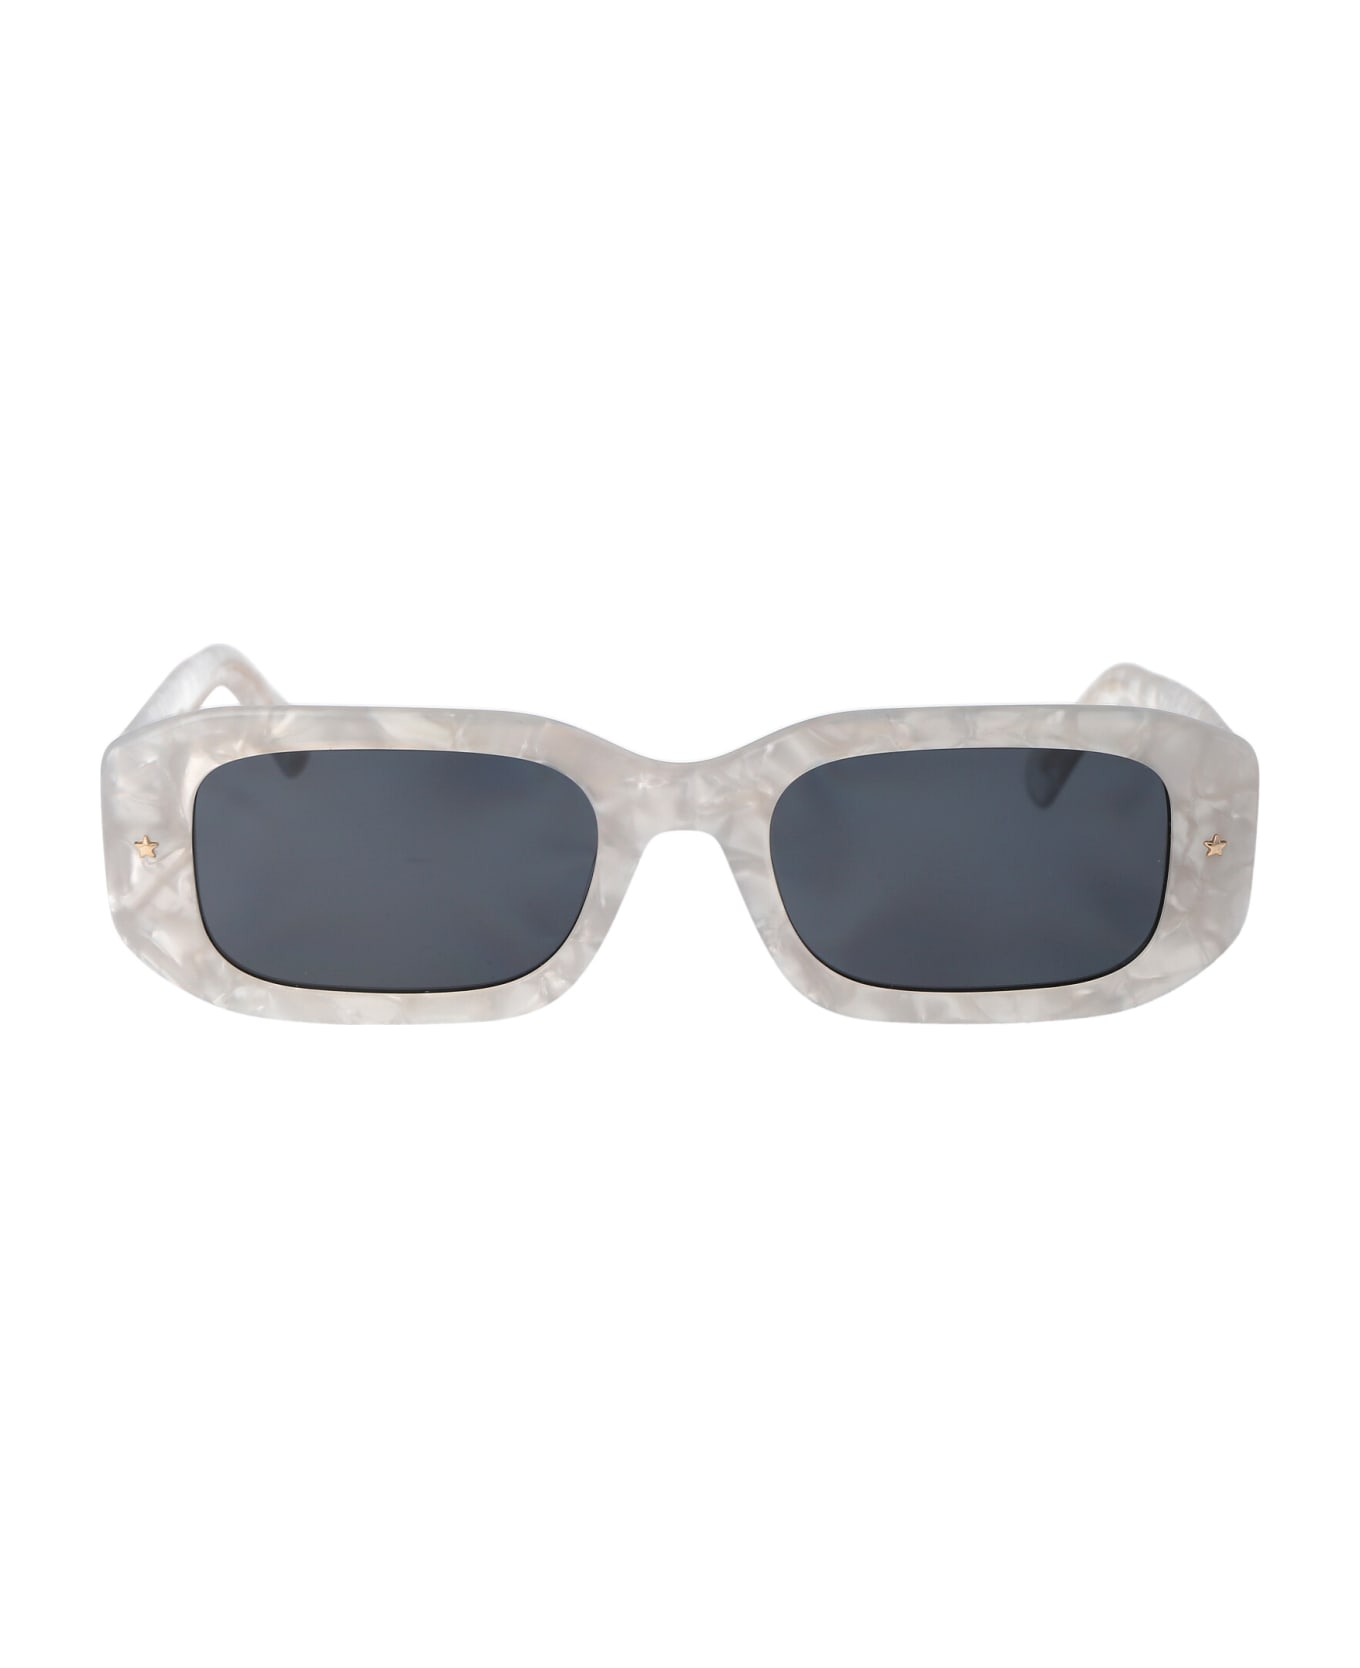 Chiara Ferragni Cf 7031/s Sunglasses - 7APIR PEARLED WHITE